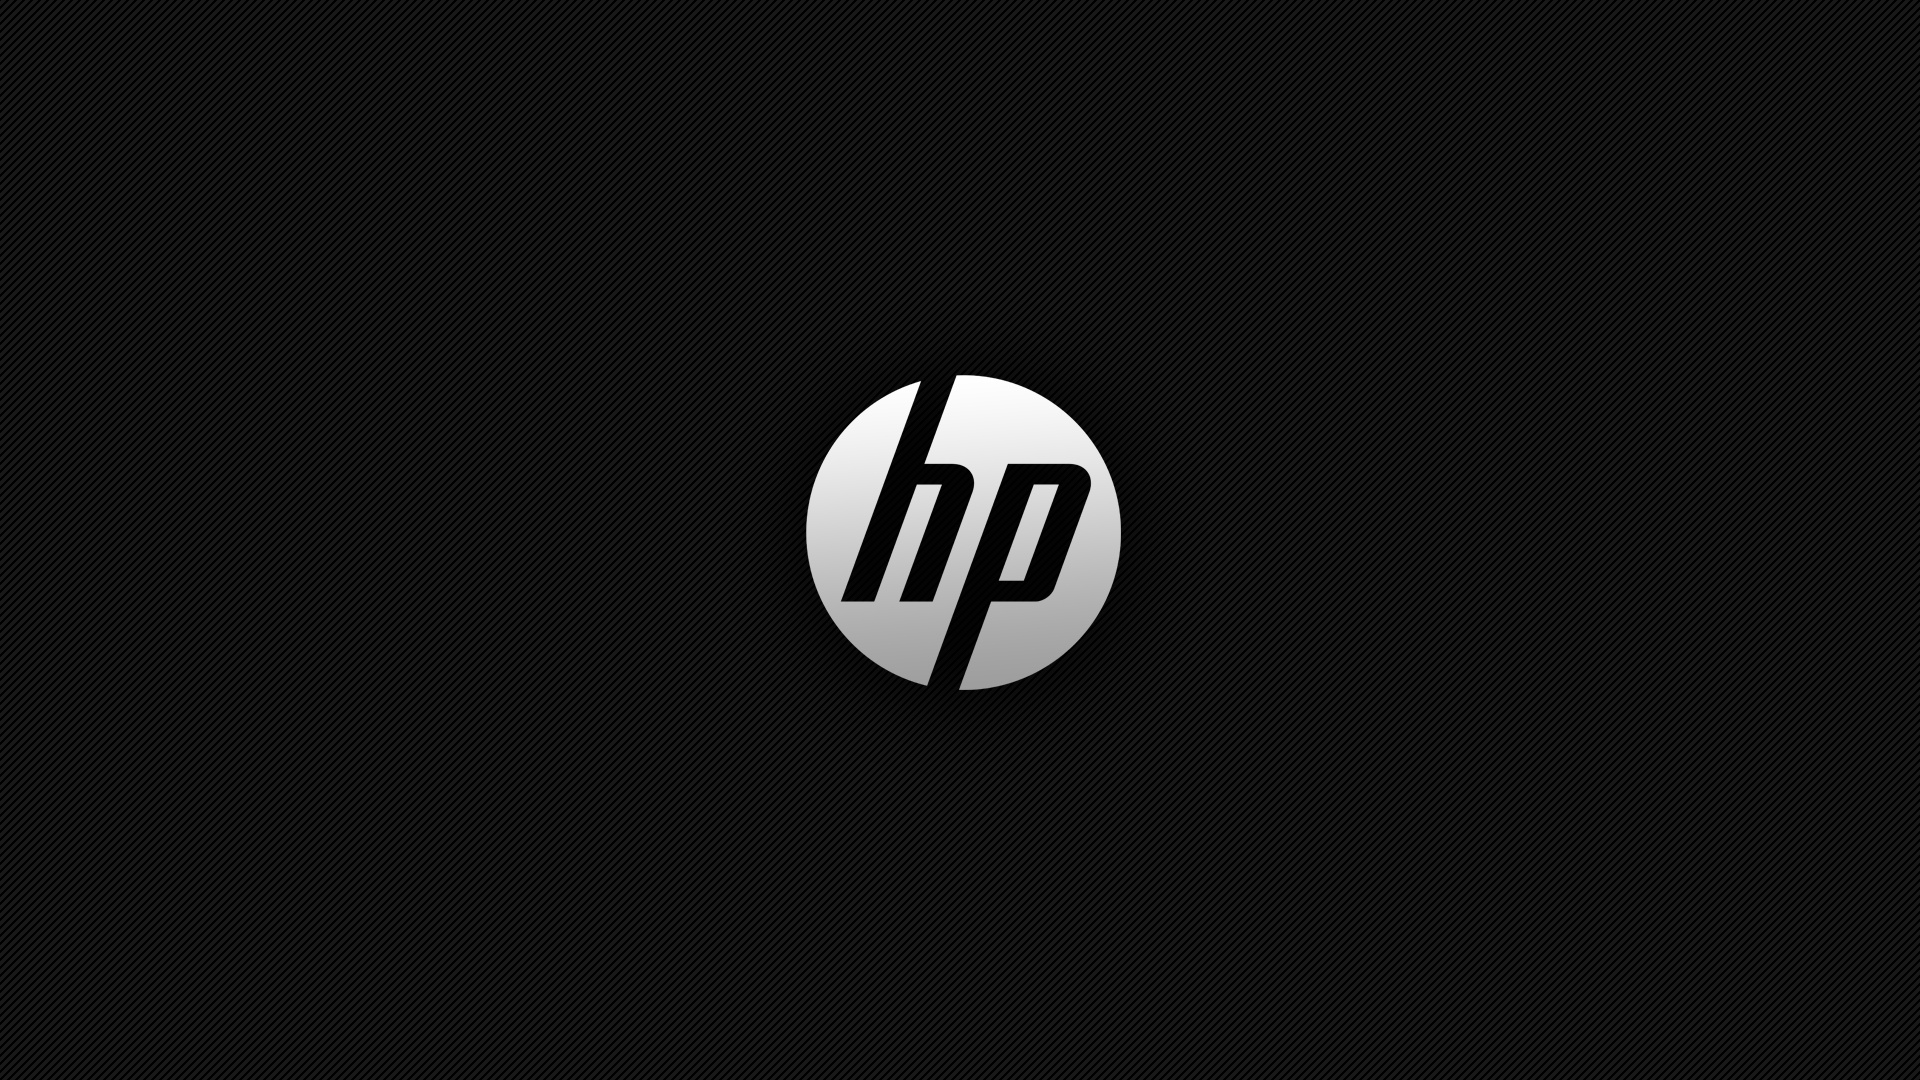 HP logo, Dark background, Evilstorm's design, Intriguing visuals, 1920x1080 Full HD Desktop